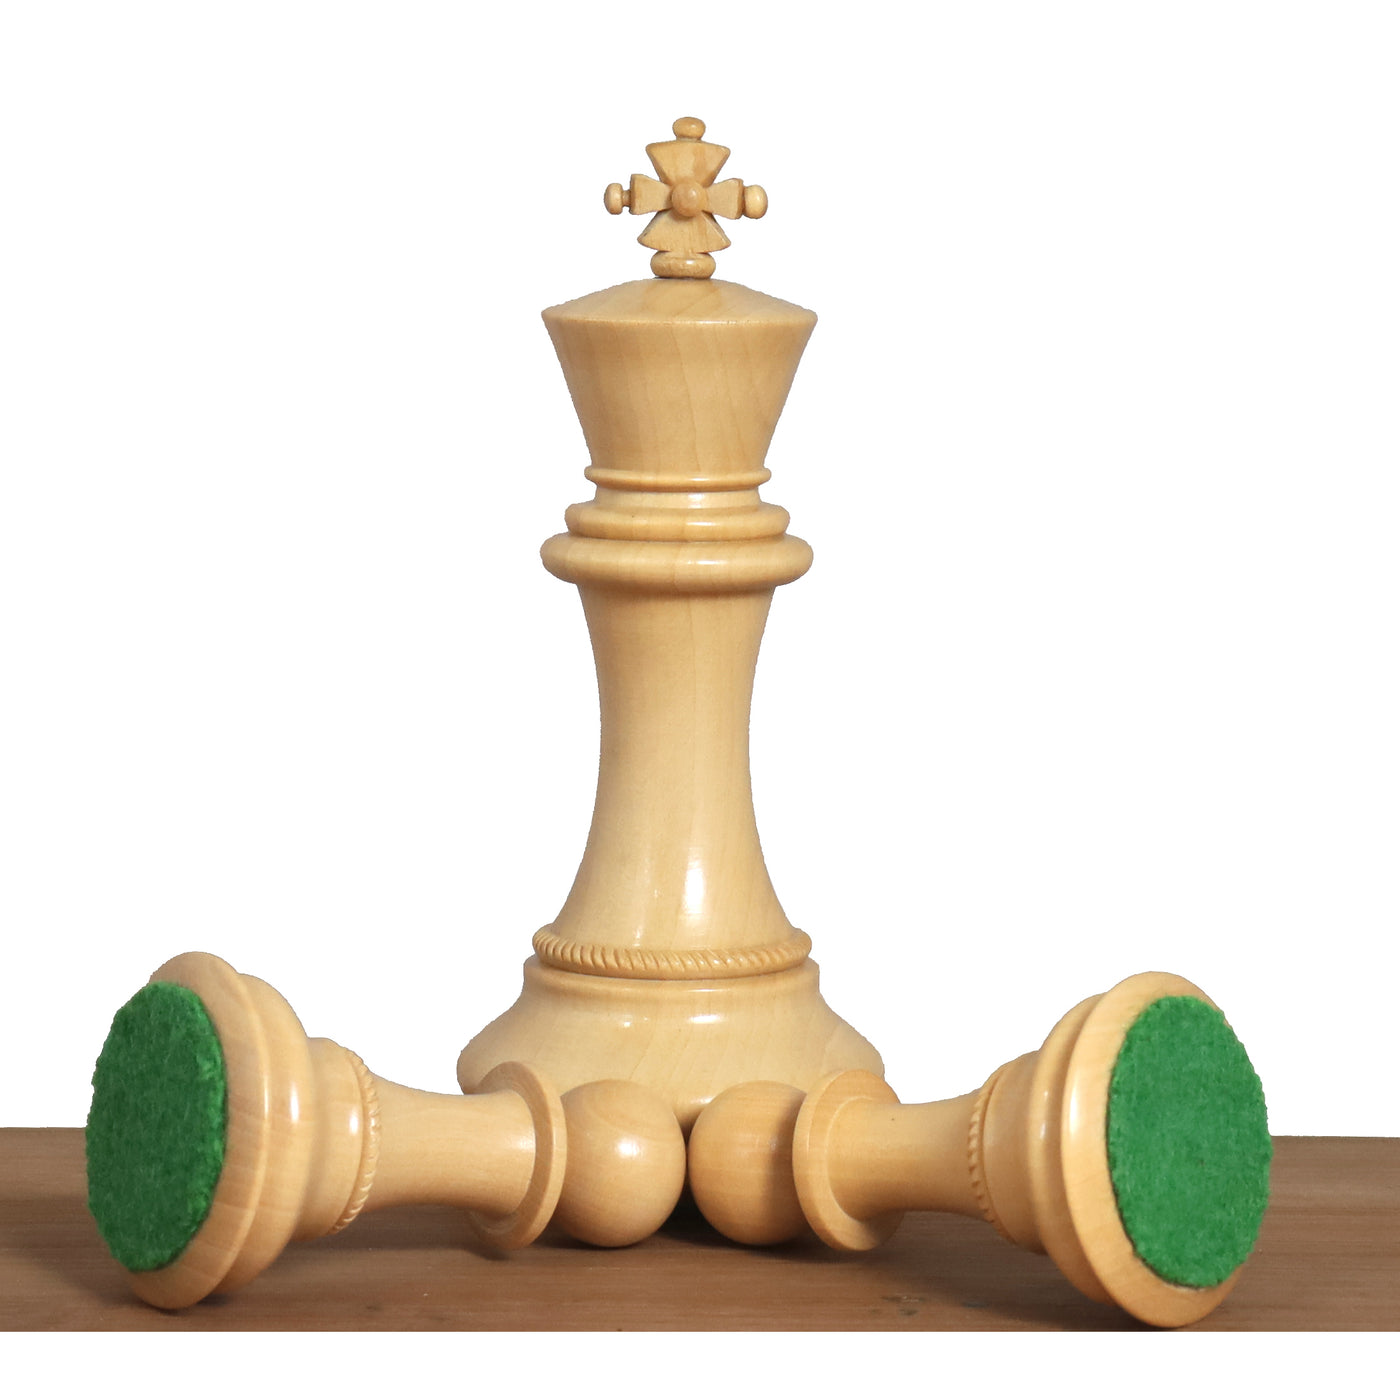 Sheffield Staunton Luxury Chess Pieces Only Set